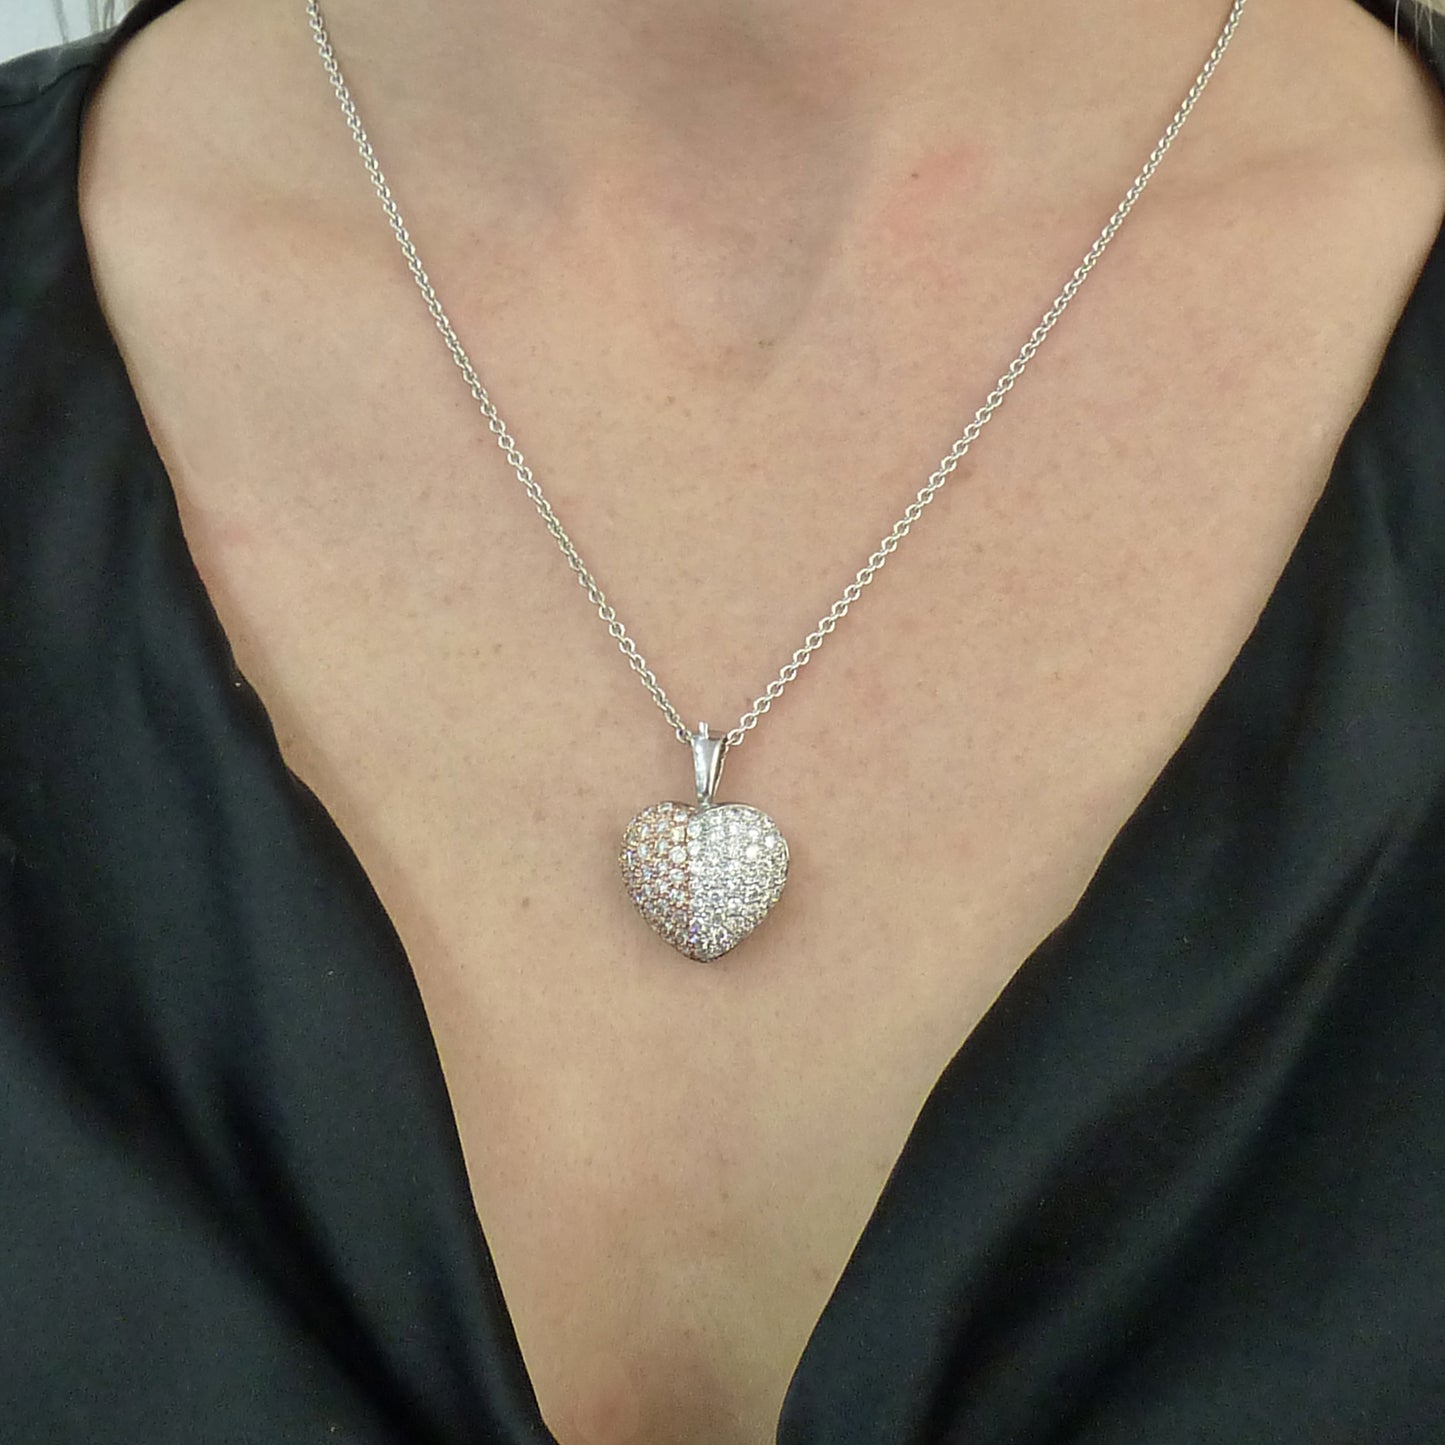 Stunning Heart Shaped Diamond Pendant - 18K White Gold